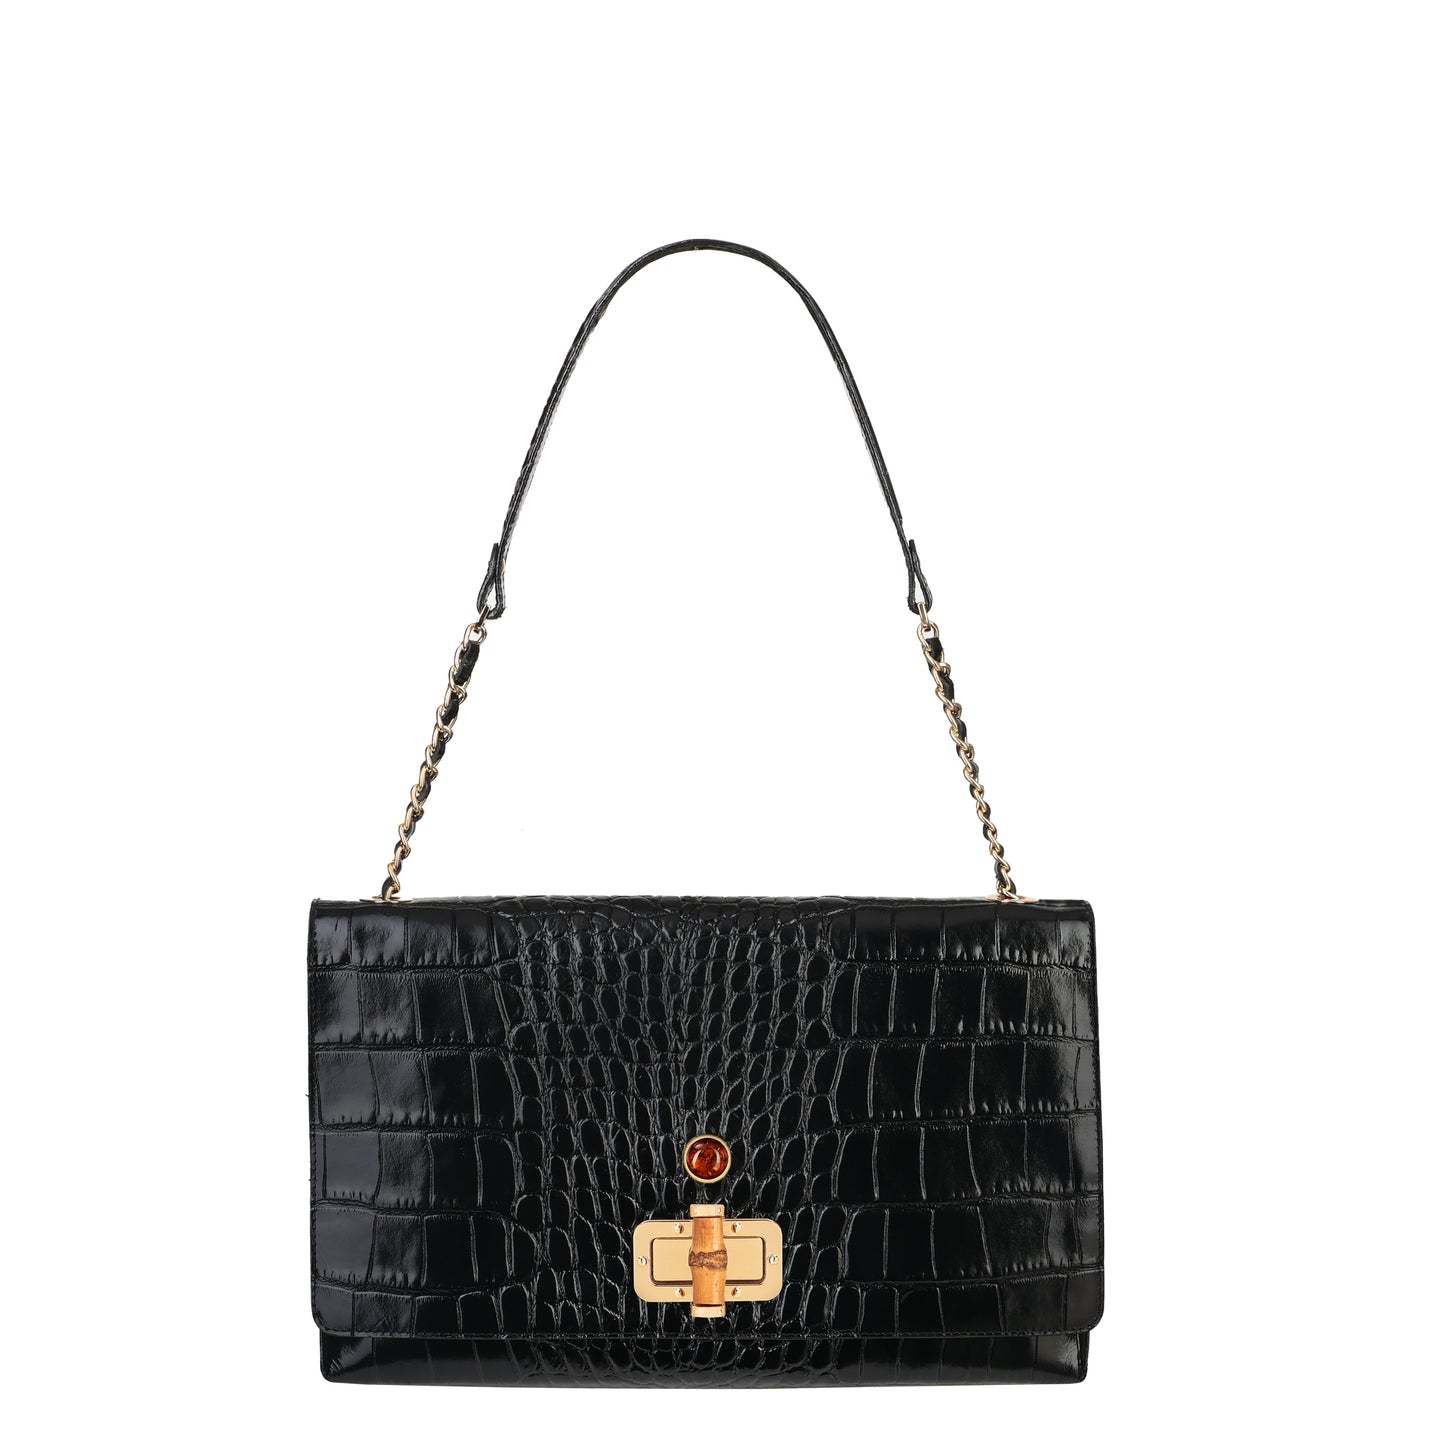 SAINT-TROPEZ croco black women's leather handbag